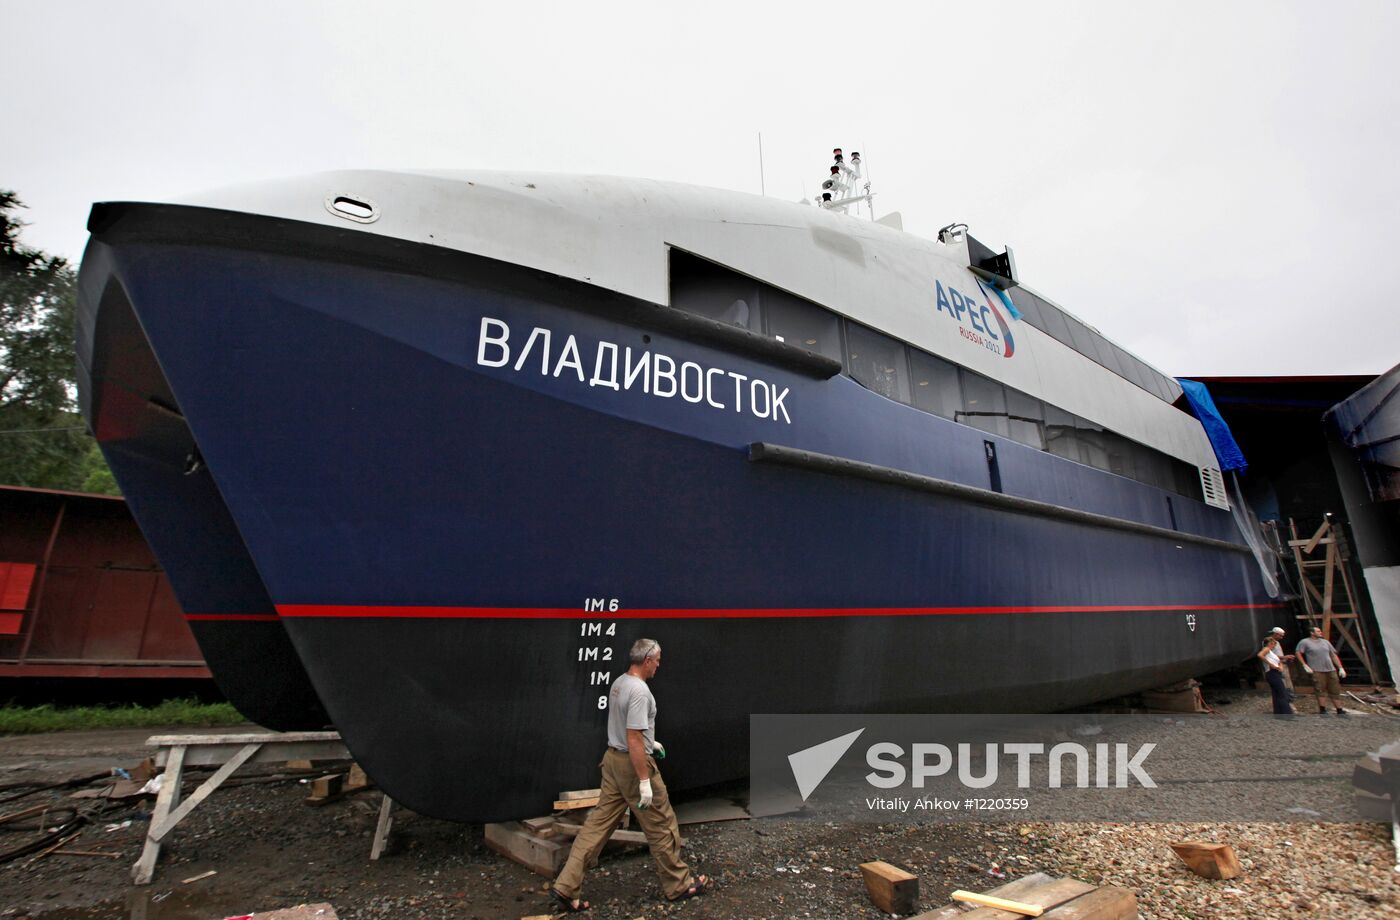 Testing twin-hull vessel built for APEC Leaders' Week